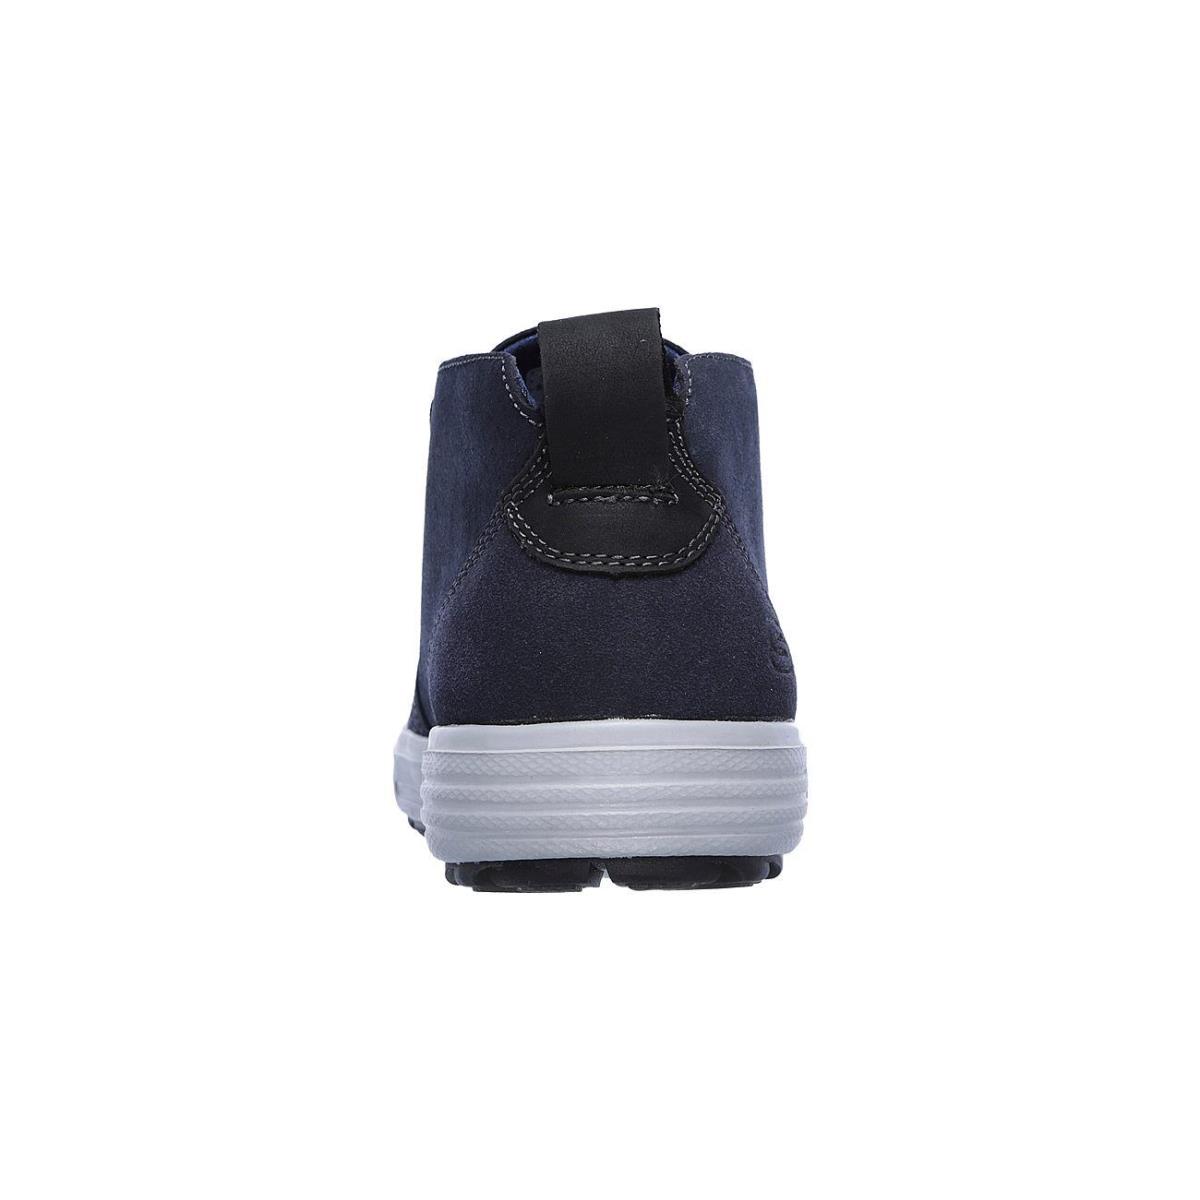 Skechers shoes  - Navy 0